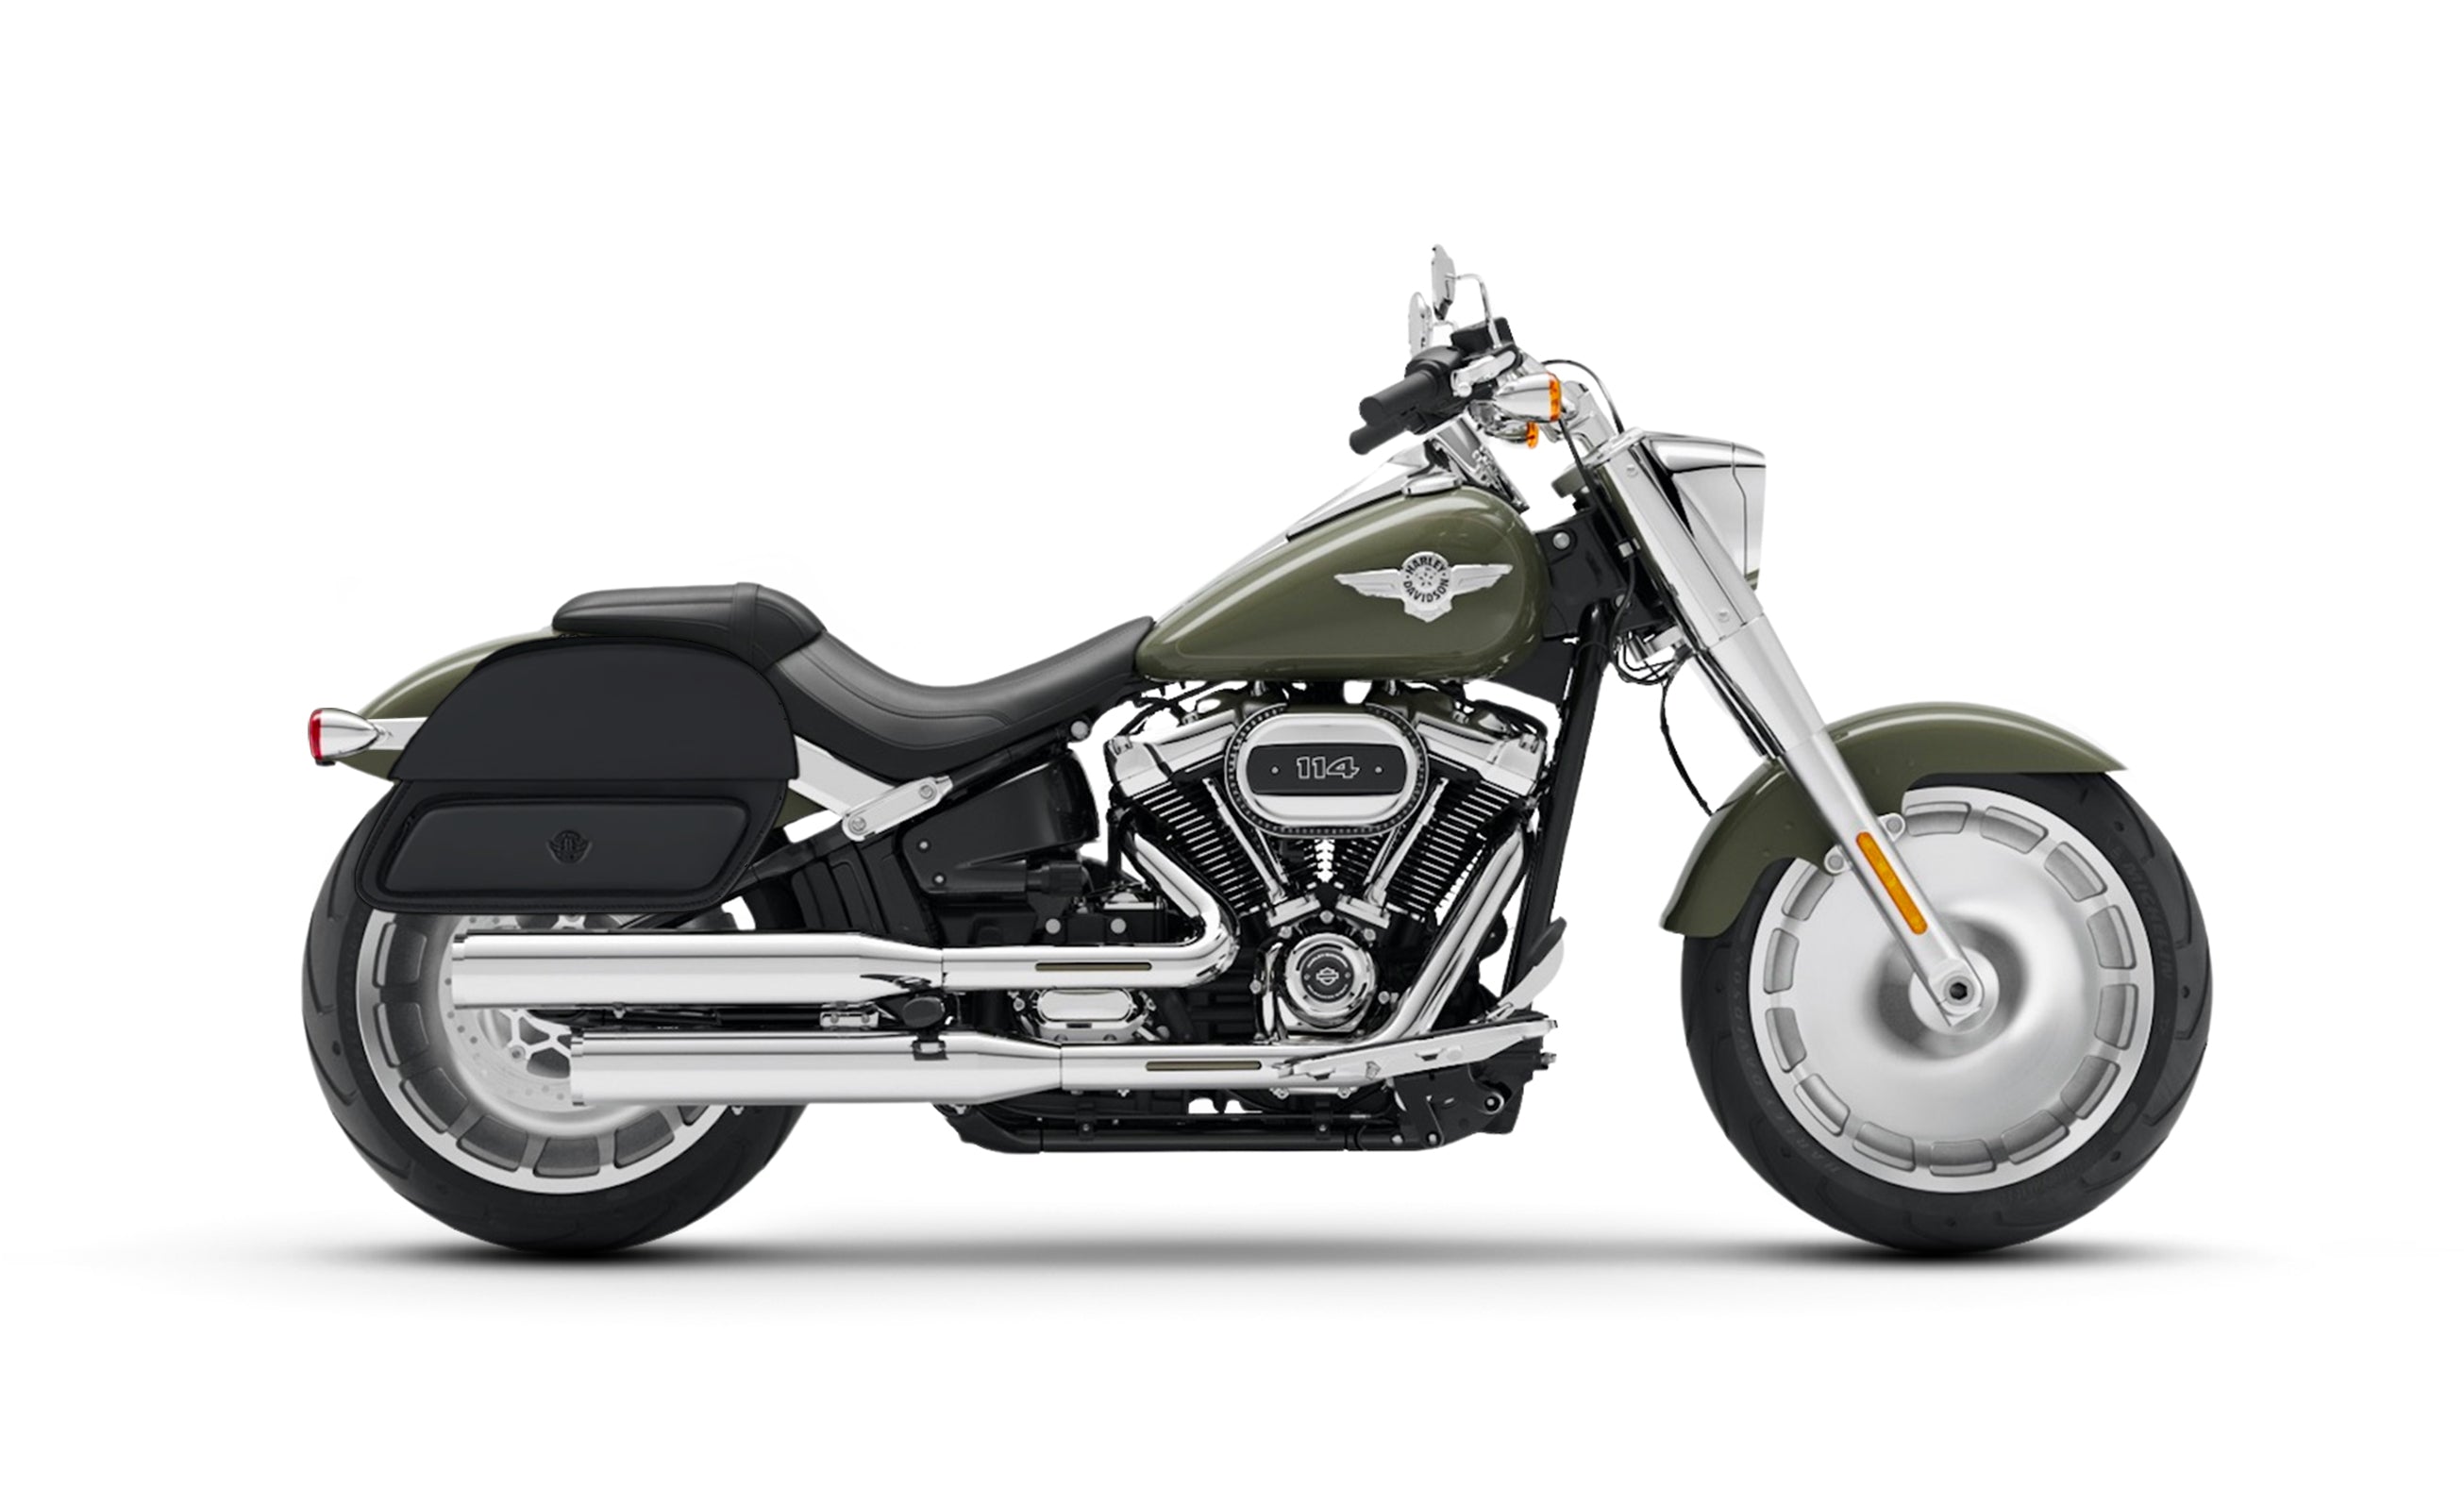 28L - Pantheon Medium Motorcycle Saddlebags for Harley Softail Fat Boy FLFB/S @expand